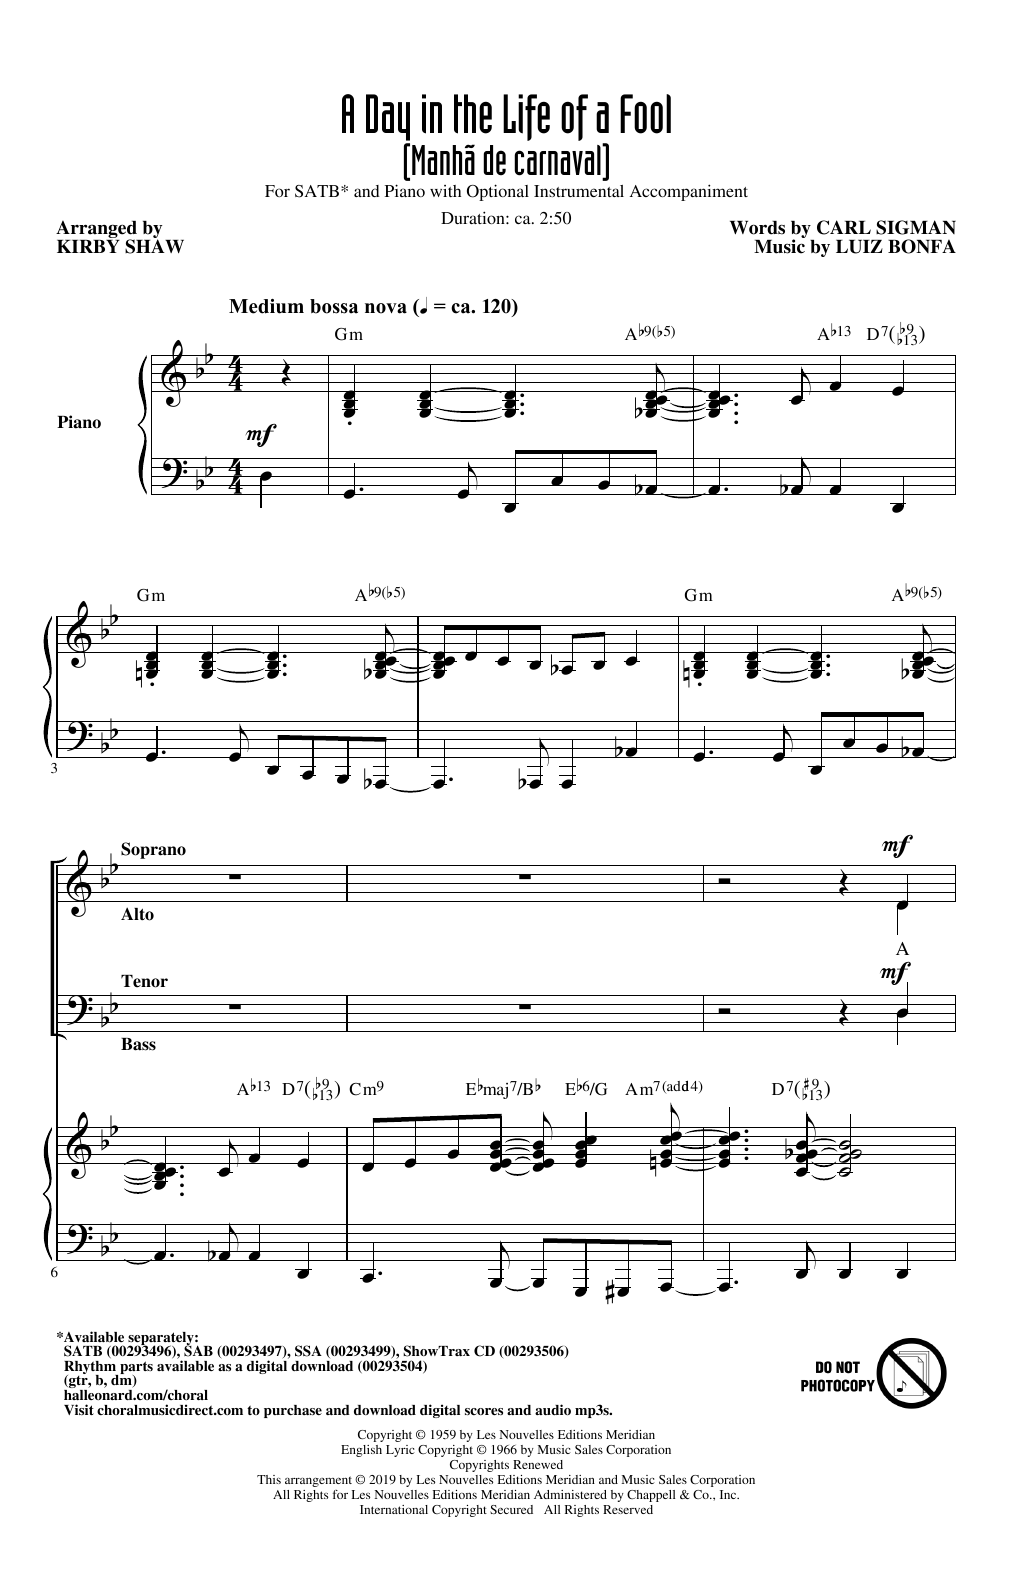 Carl Sigman & Luiz Bonfa A Day In The Life Of A Fool (Manha De Carnaval) (arr. Kirby Shaw) Sheet Music Notes & Chords for SATB Choir - Download or Print PDF